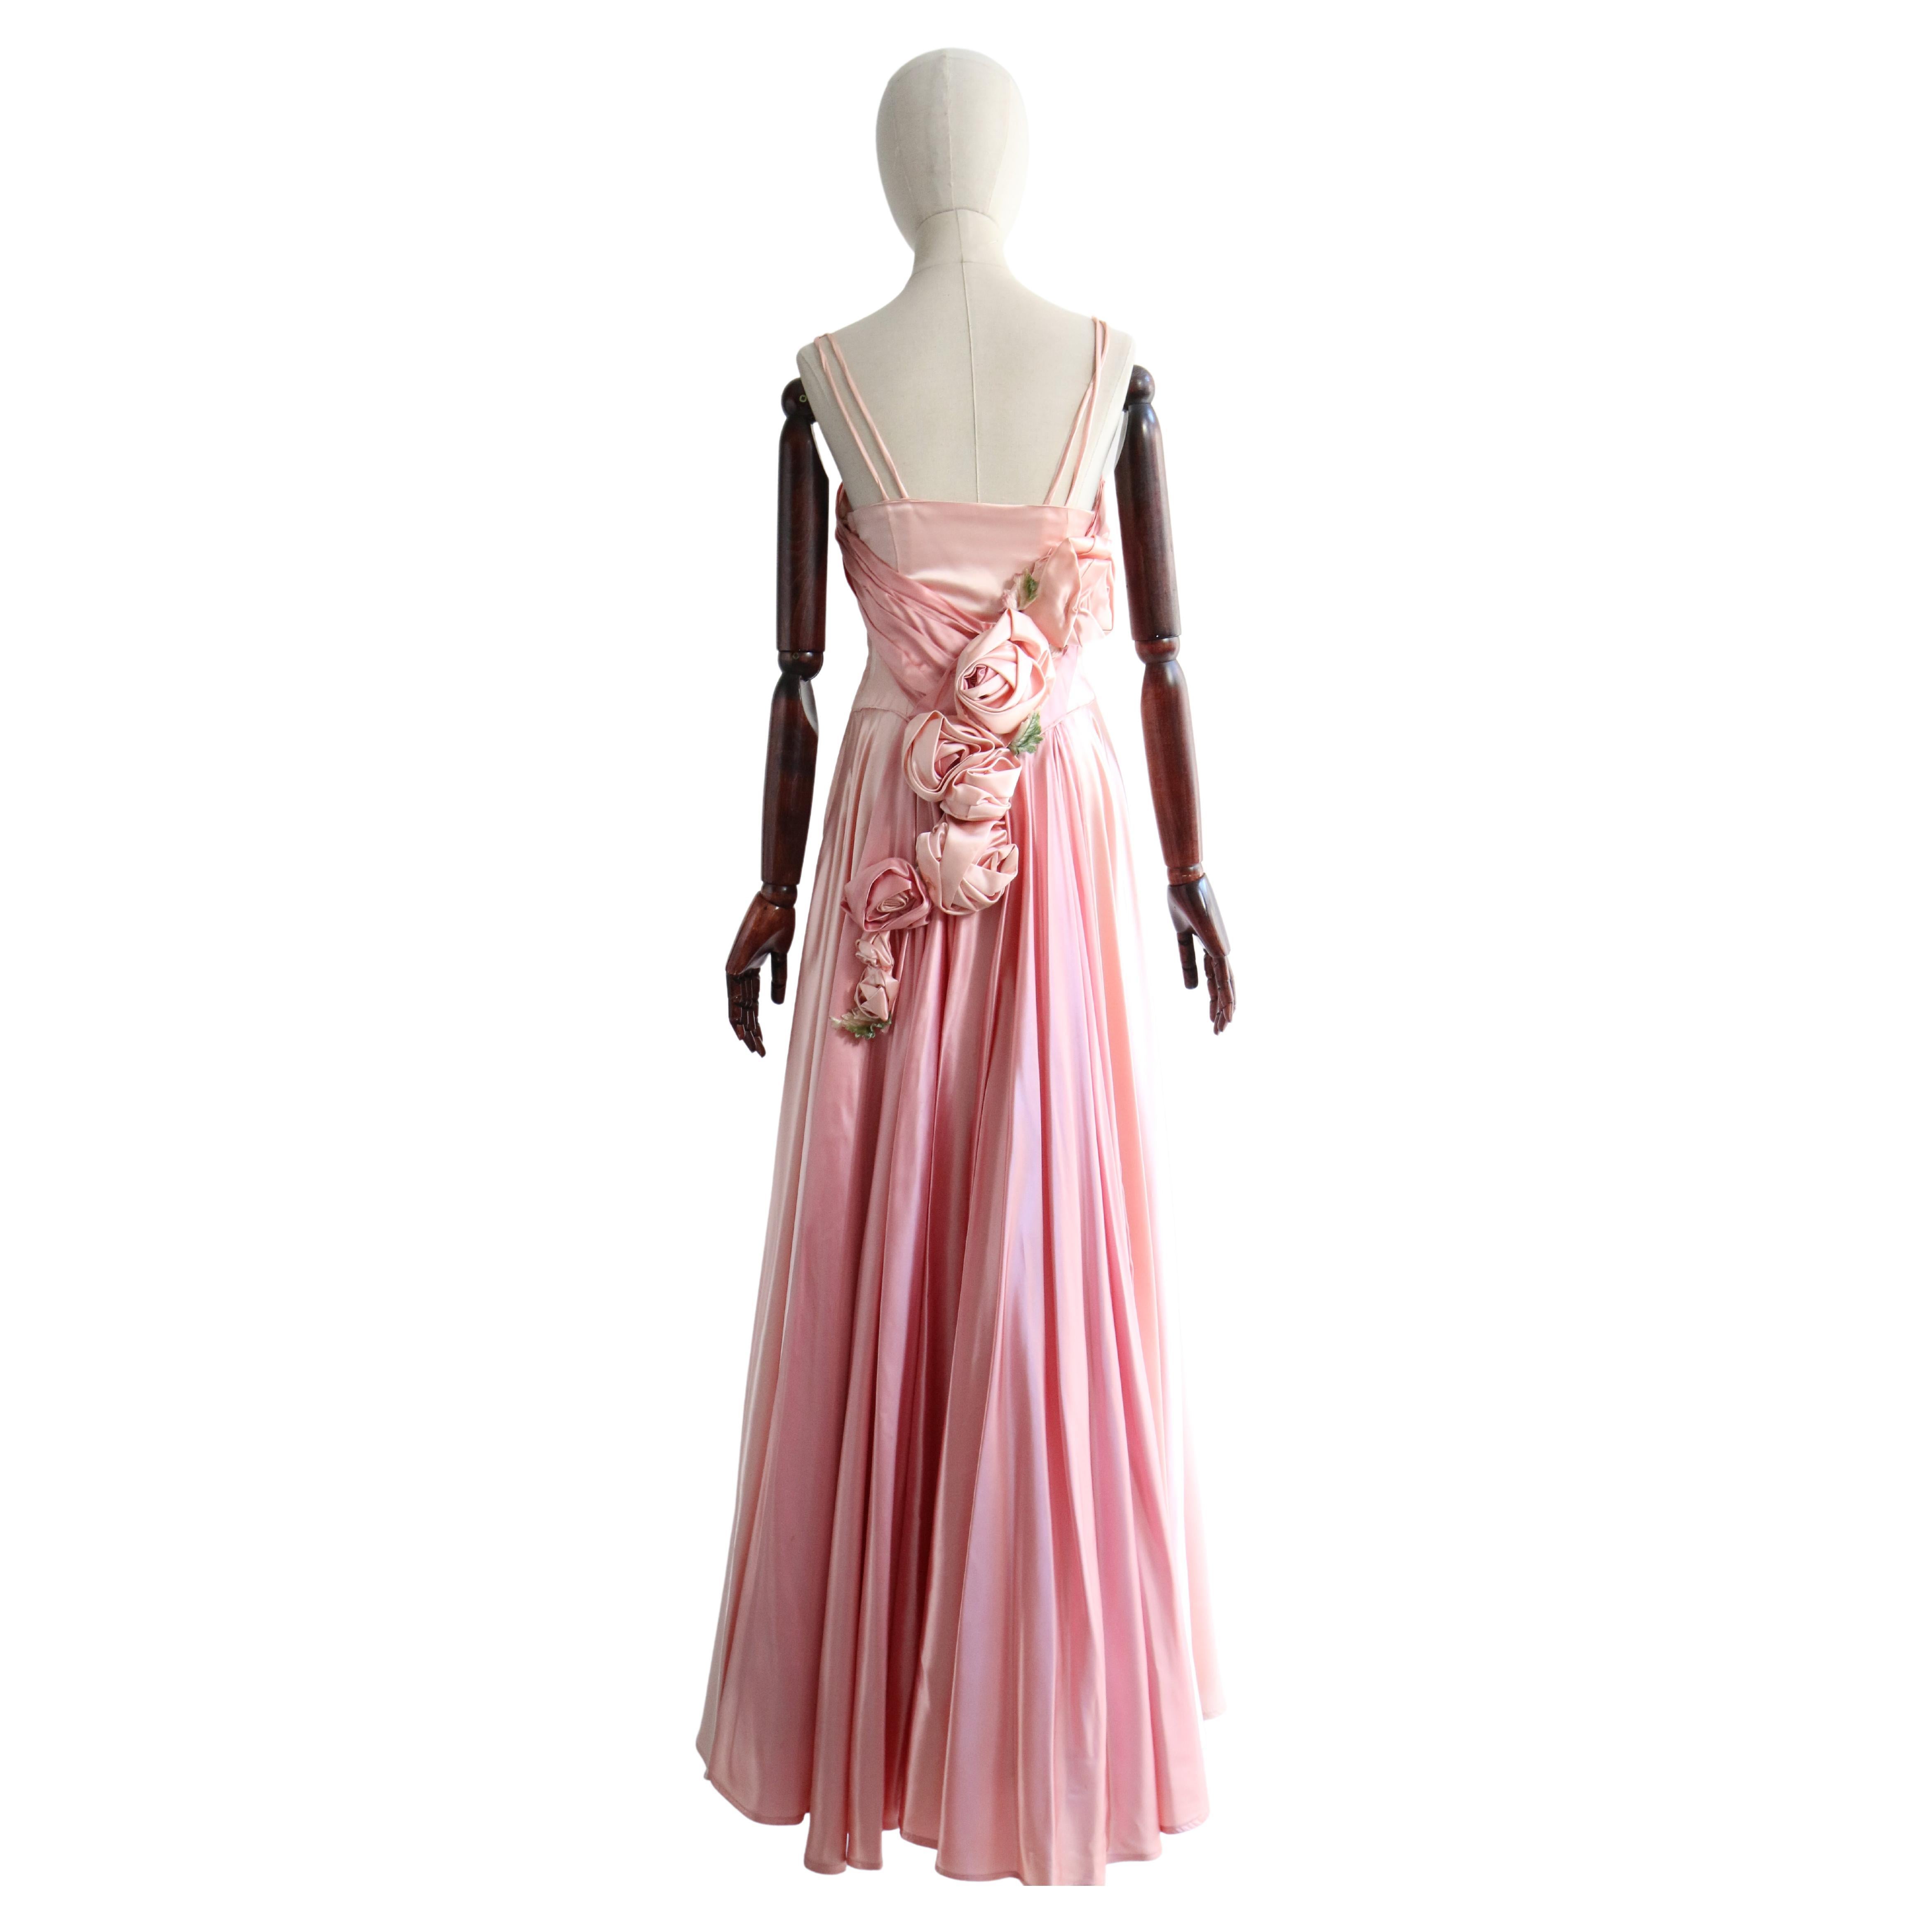 Vintage 1950's Duchess Satin Rose Embellished Dress UK 10 US 6